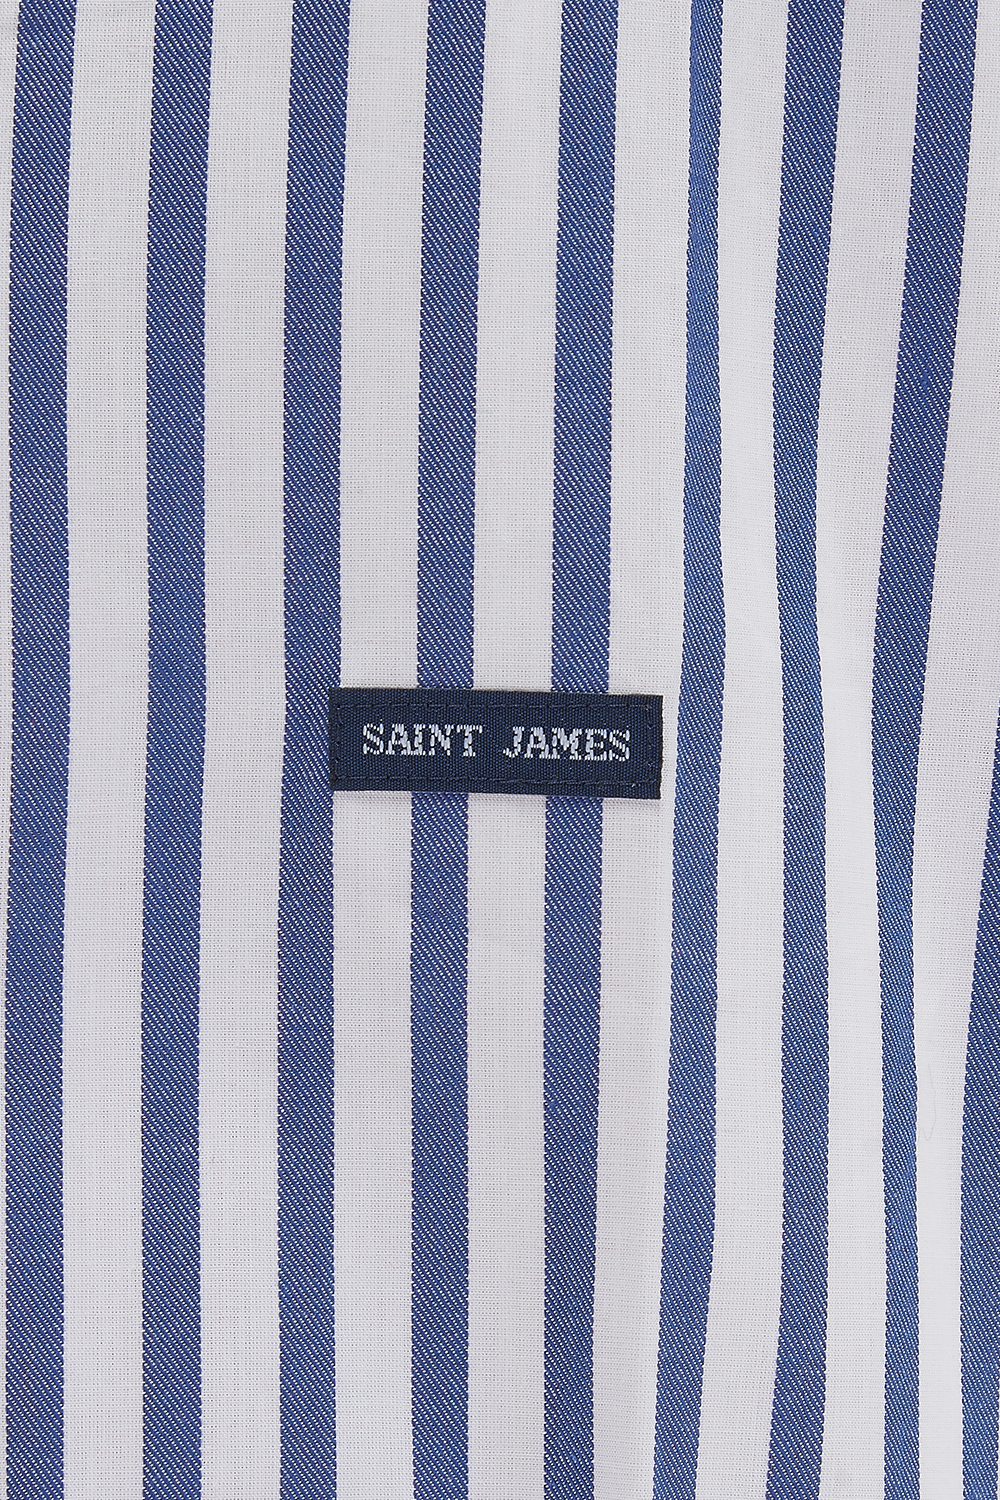 Saint James Benedicte Women’s Striped Shirt Dress Blue/White - New SS21  Collection